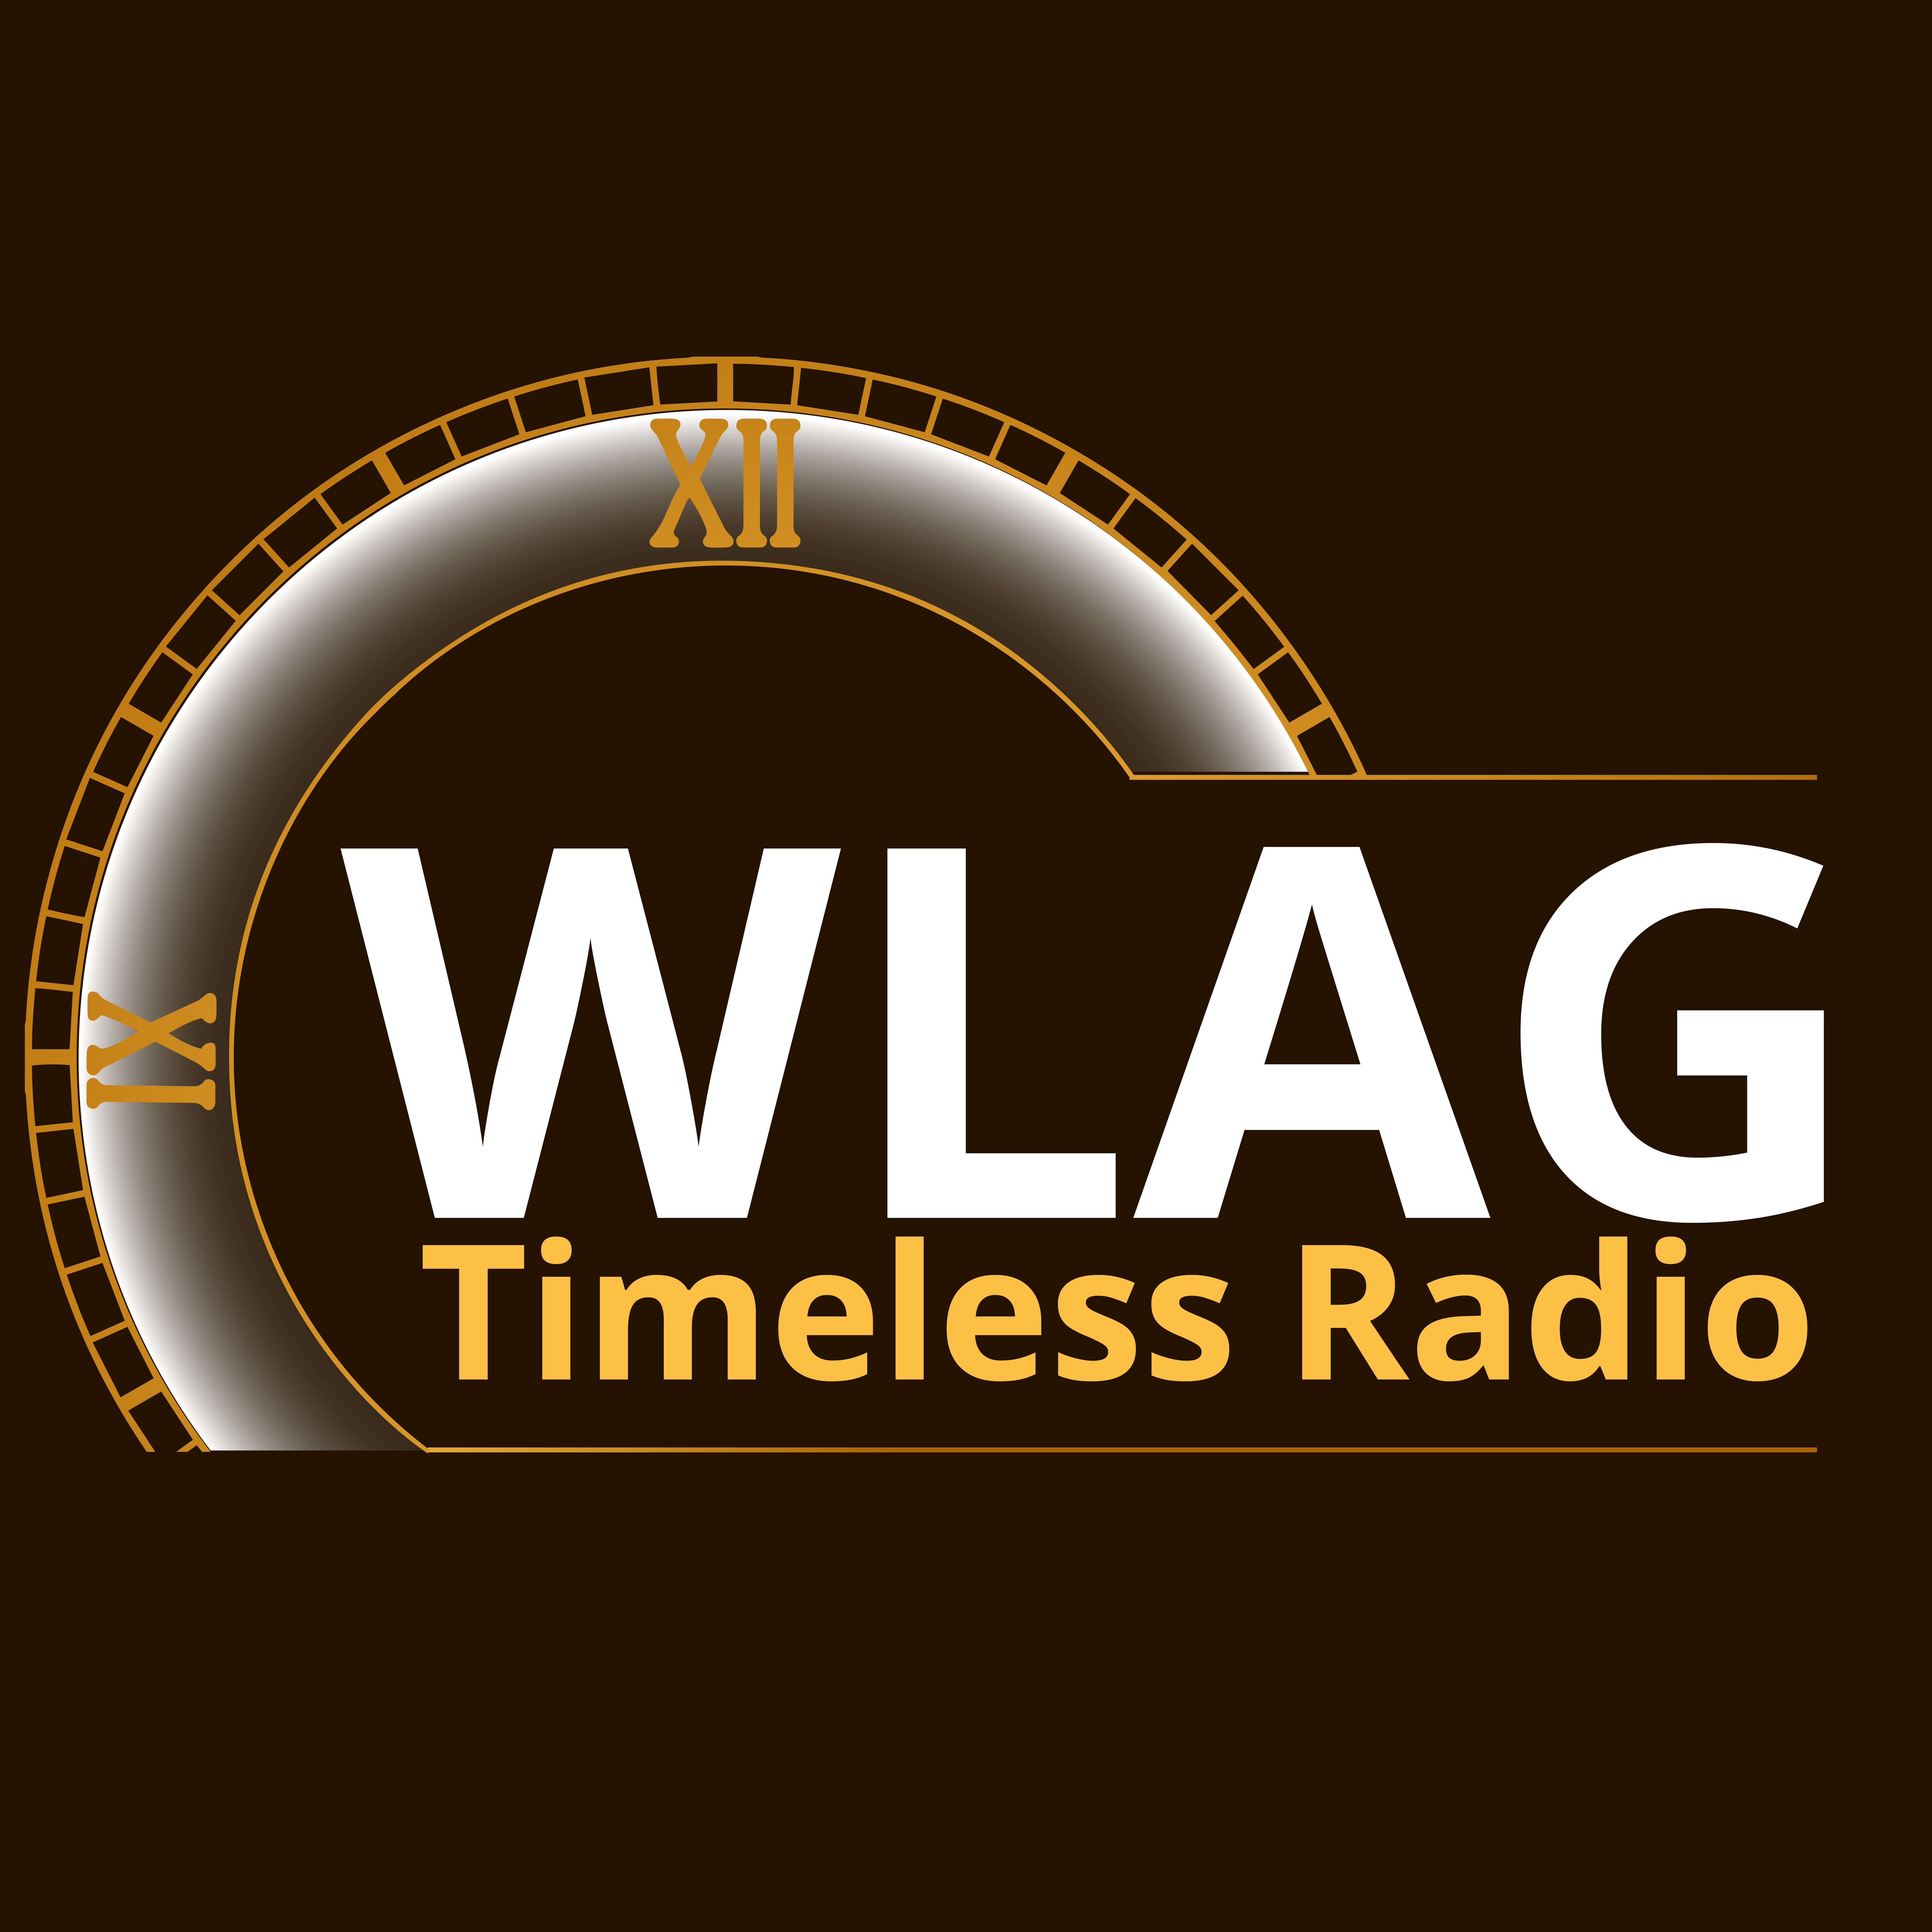 WLAG TIMELESS RADIO